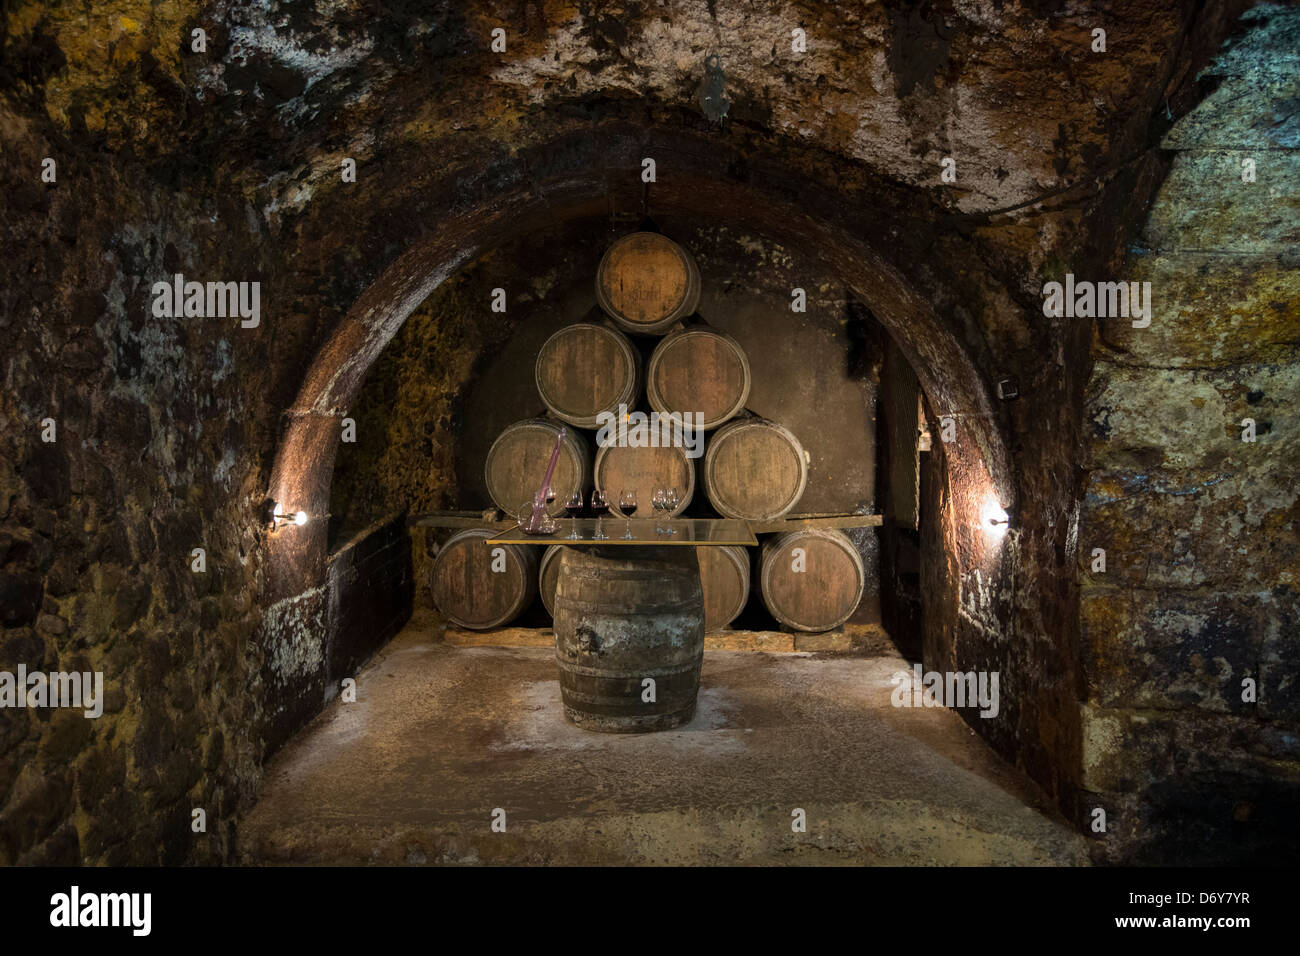 Oak barrels of Rioja wine at Carlos San Pedro Bodega winery in medieval town of Laguardia in Basque country, Spain Stock Photo